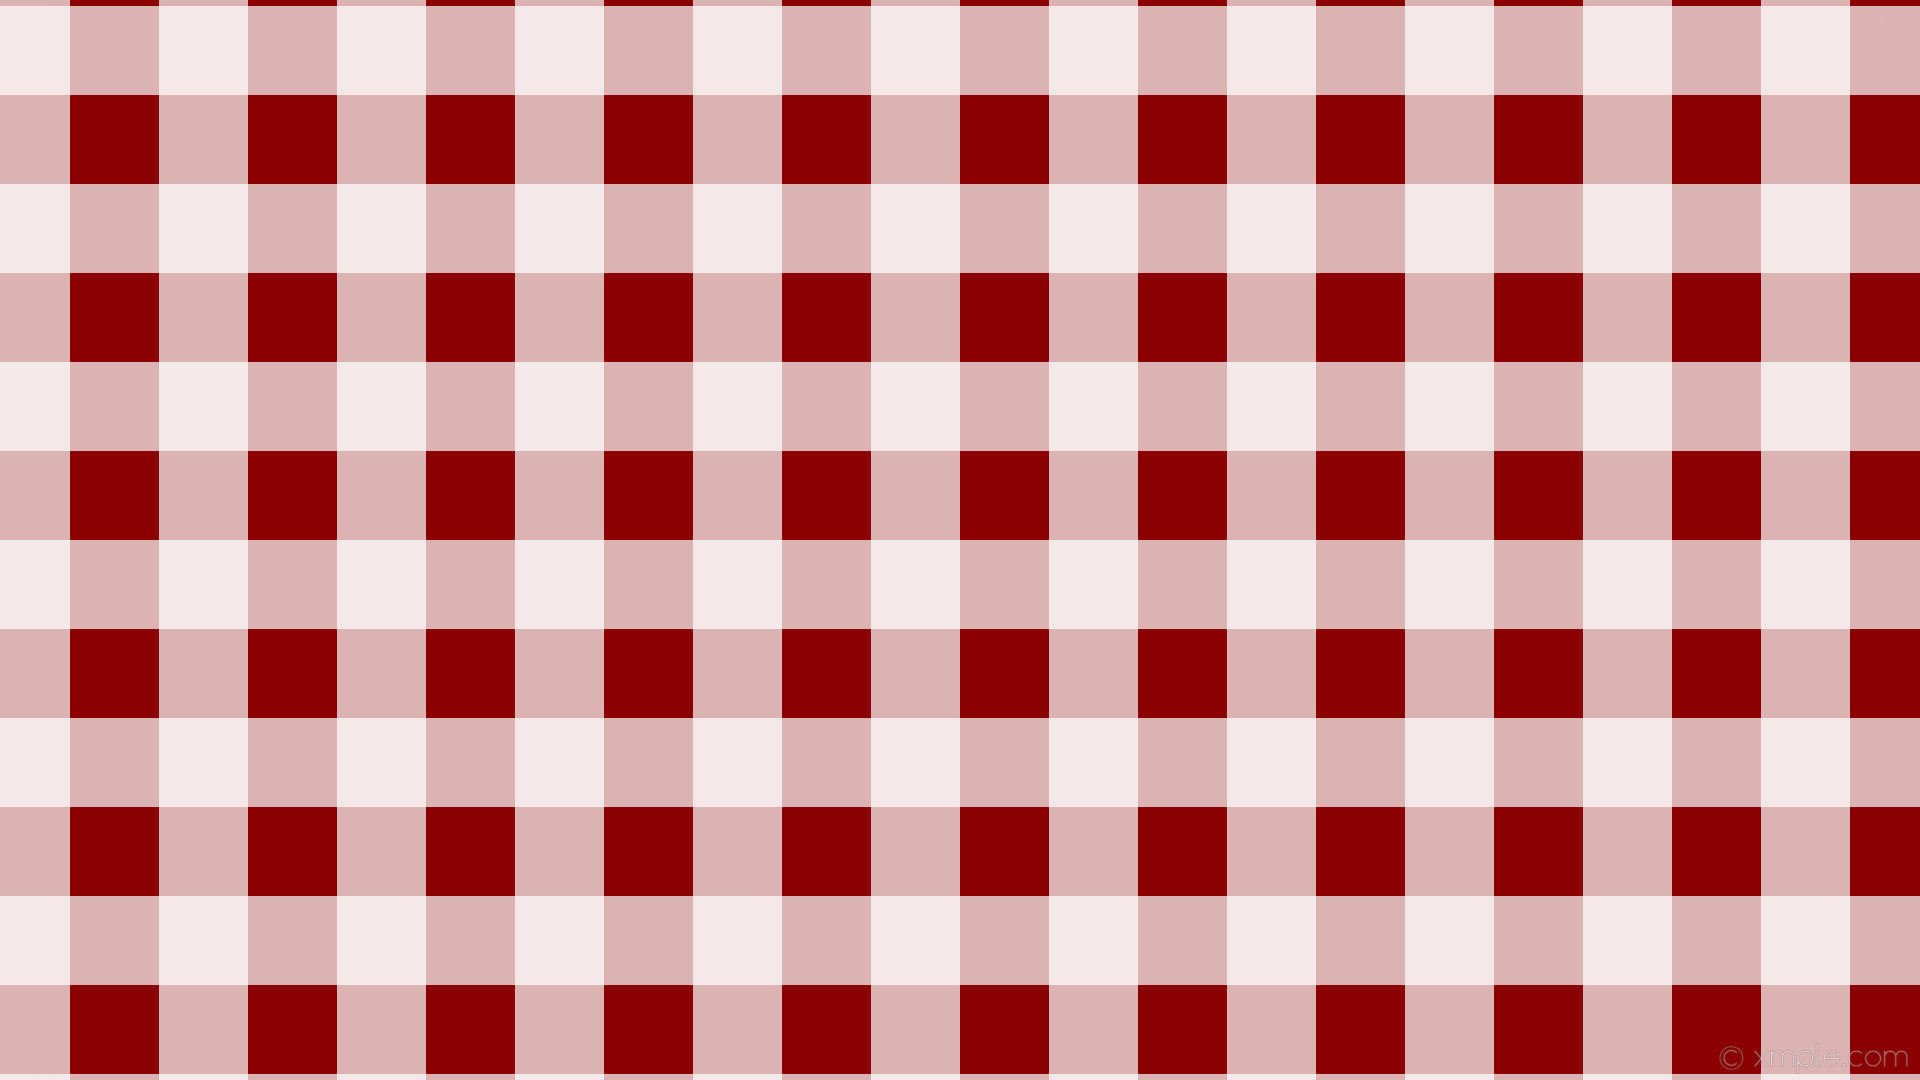 1920x1080 wallpaper red gingham white checker striped dark red #8b0000 #ffffff 270Â°  89px